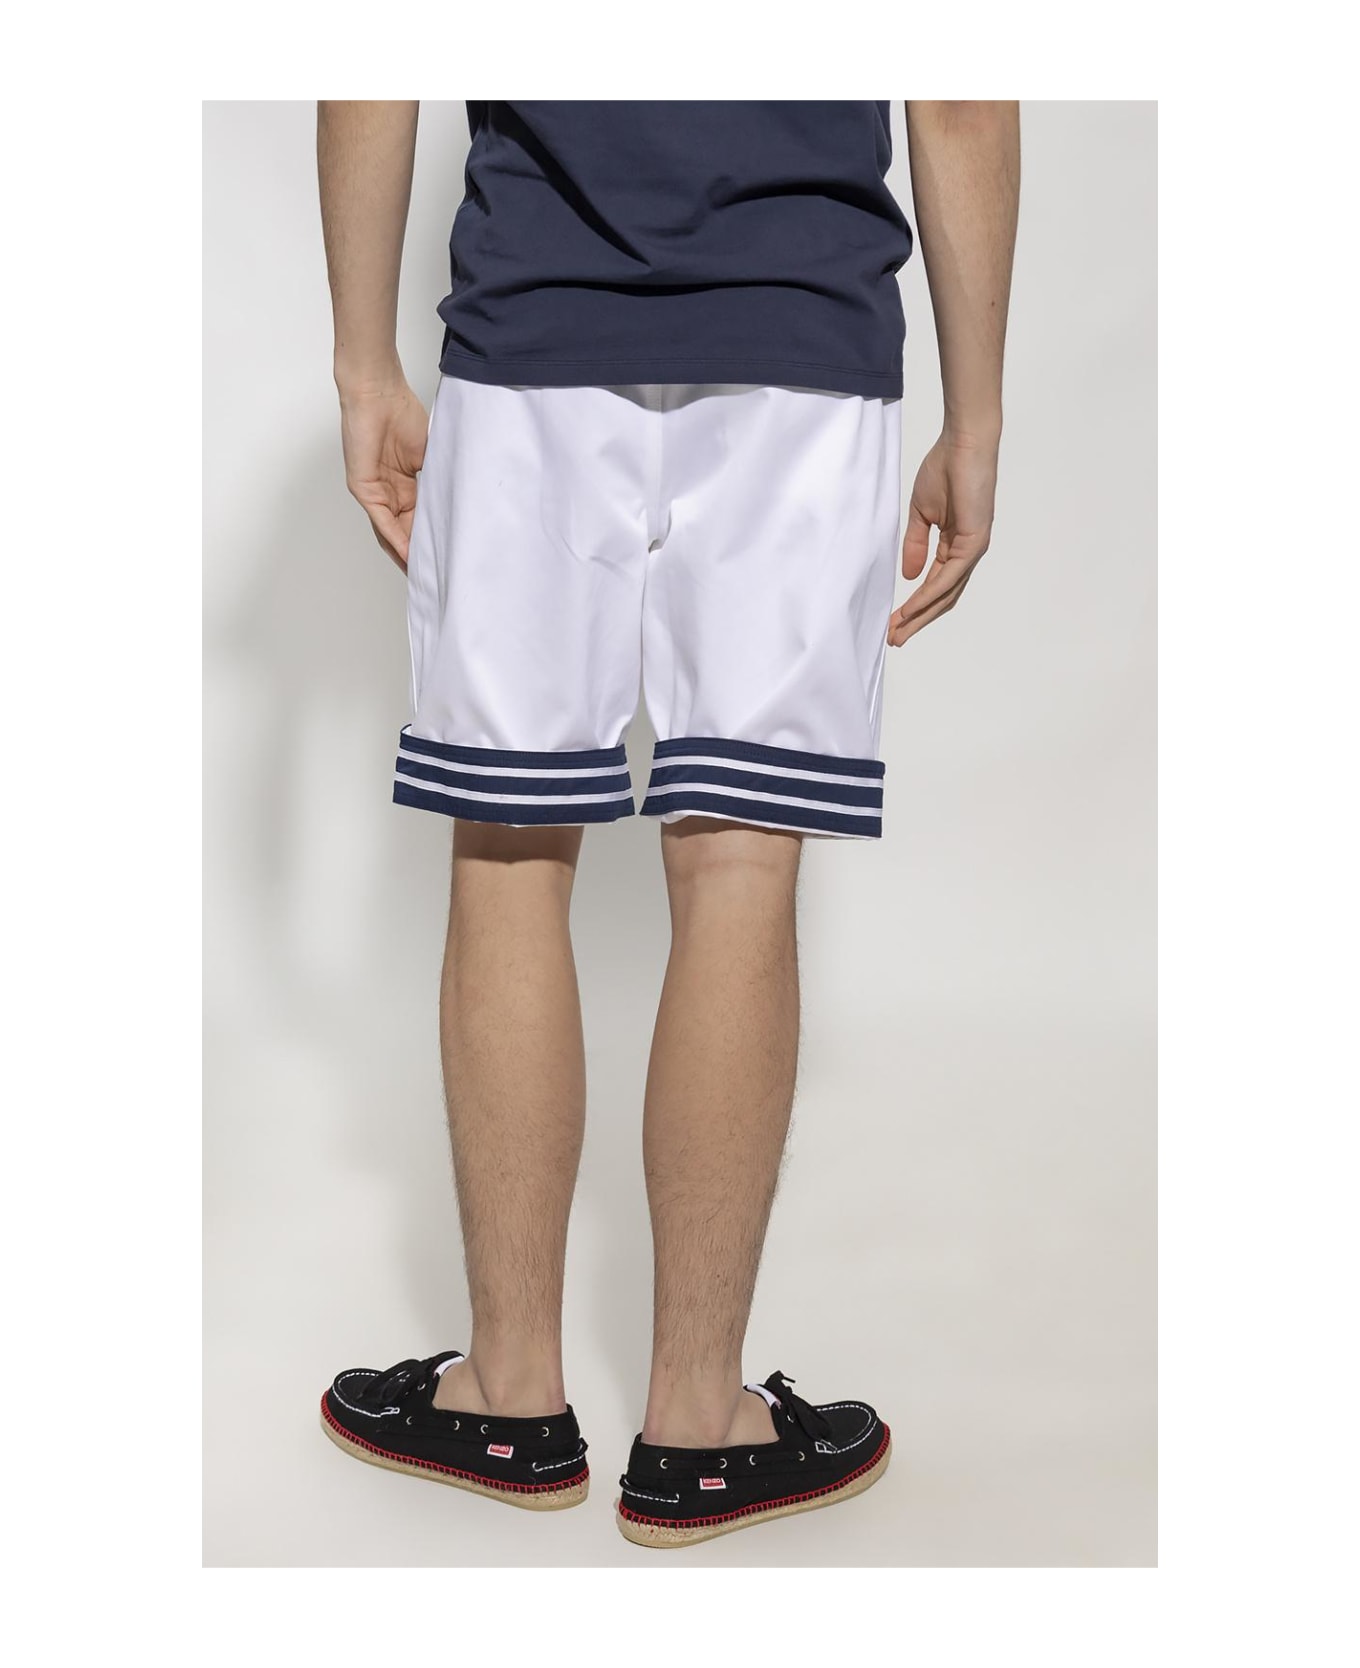 Kenzo Sailor Shorts - WHITE